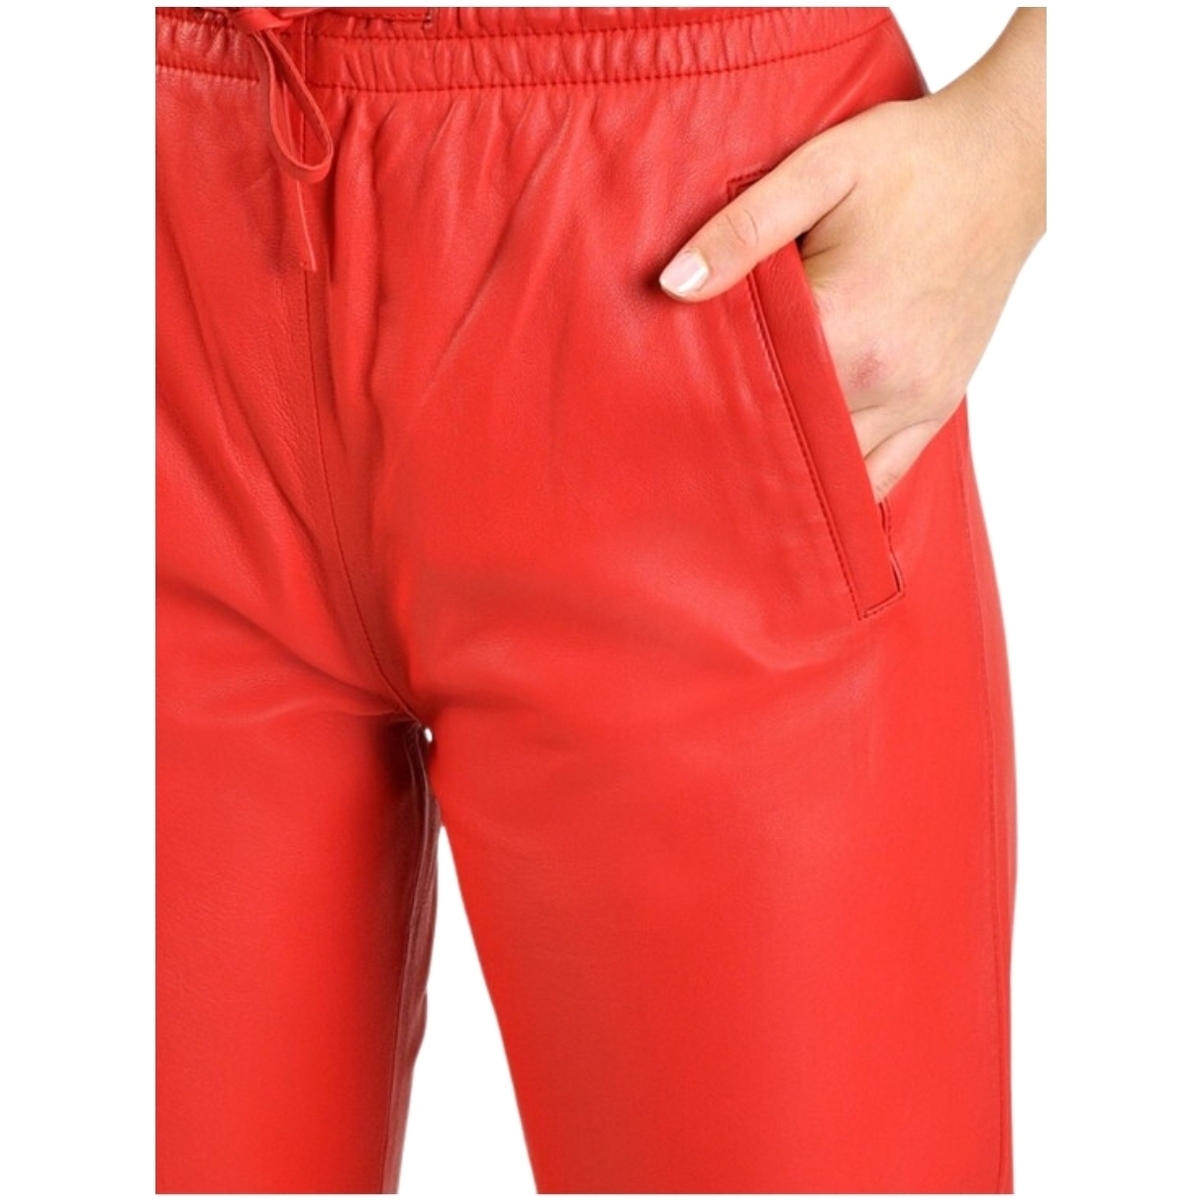 Oakwood Rouge Pantalon jogpant en cuir Gift Ref 50426 Rouge Fonce FcfkGux9